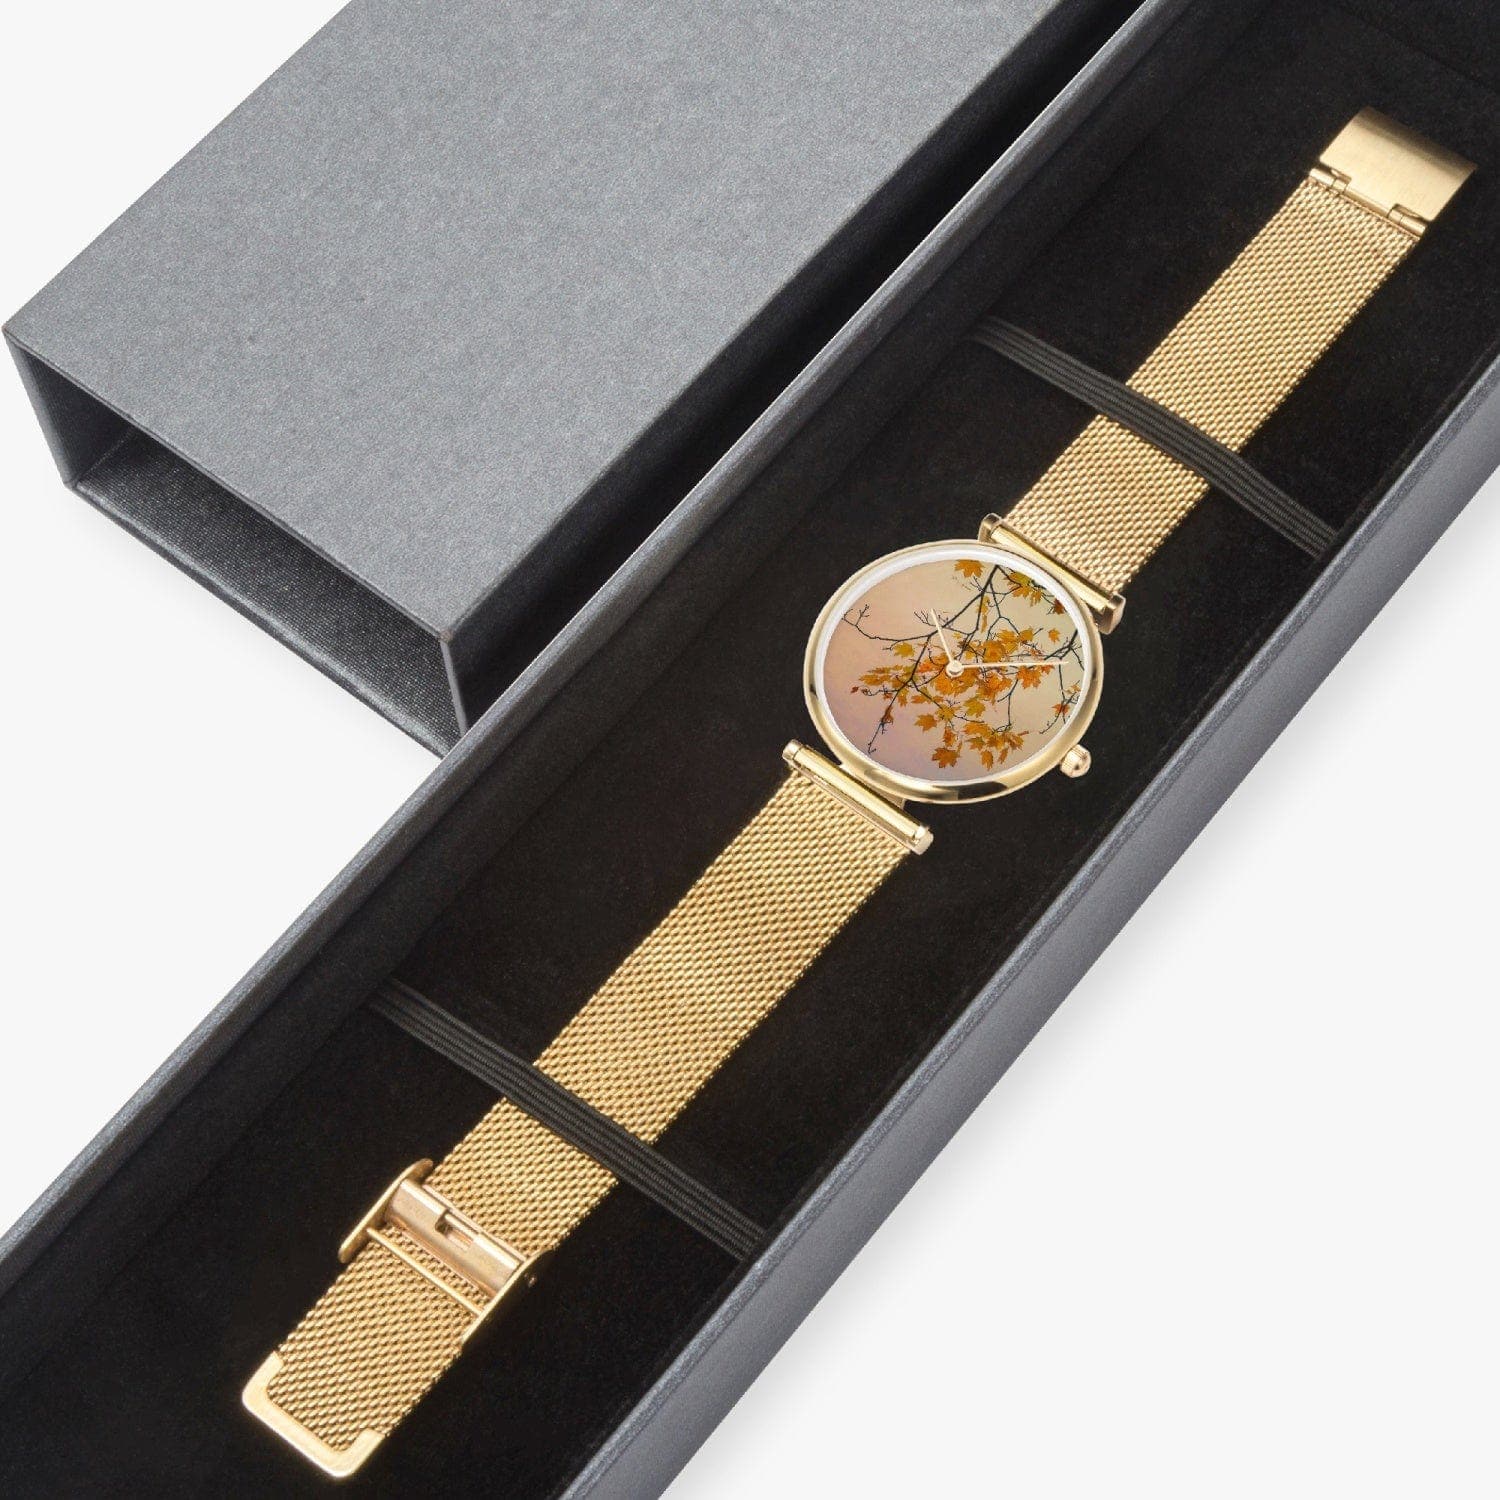 Yellow Maple leafes. New Stylish Ultra-Thin Quartz Watch.  by Sensus Studio Design